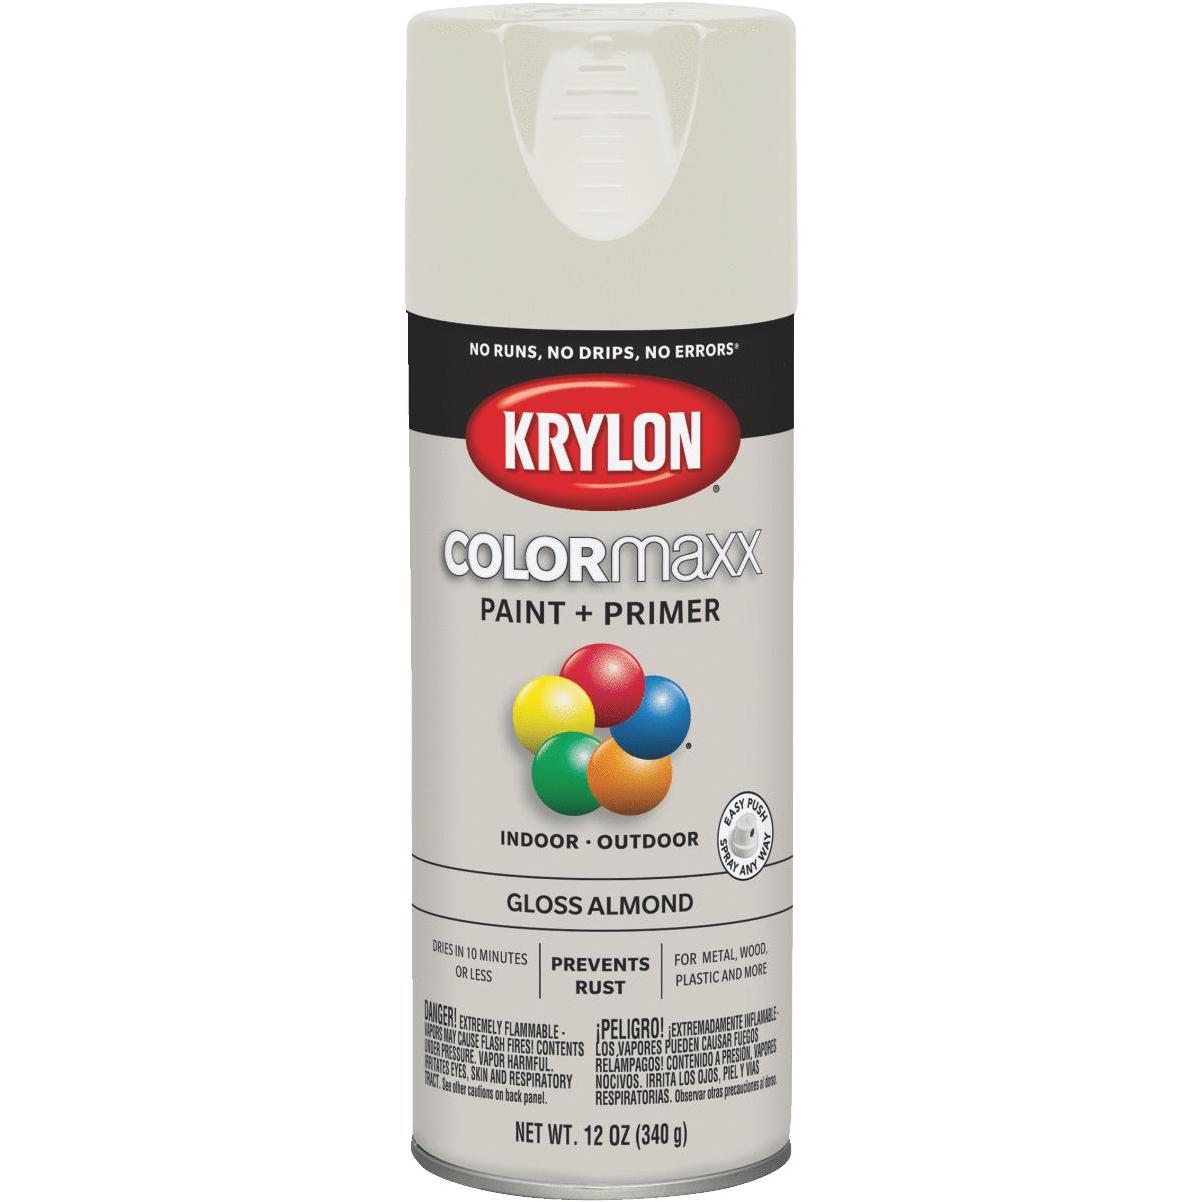 Krylon Fusion Gloss White 12 Oz. Plastic Spray Paint